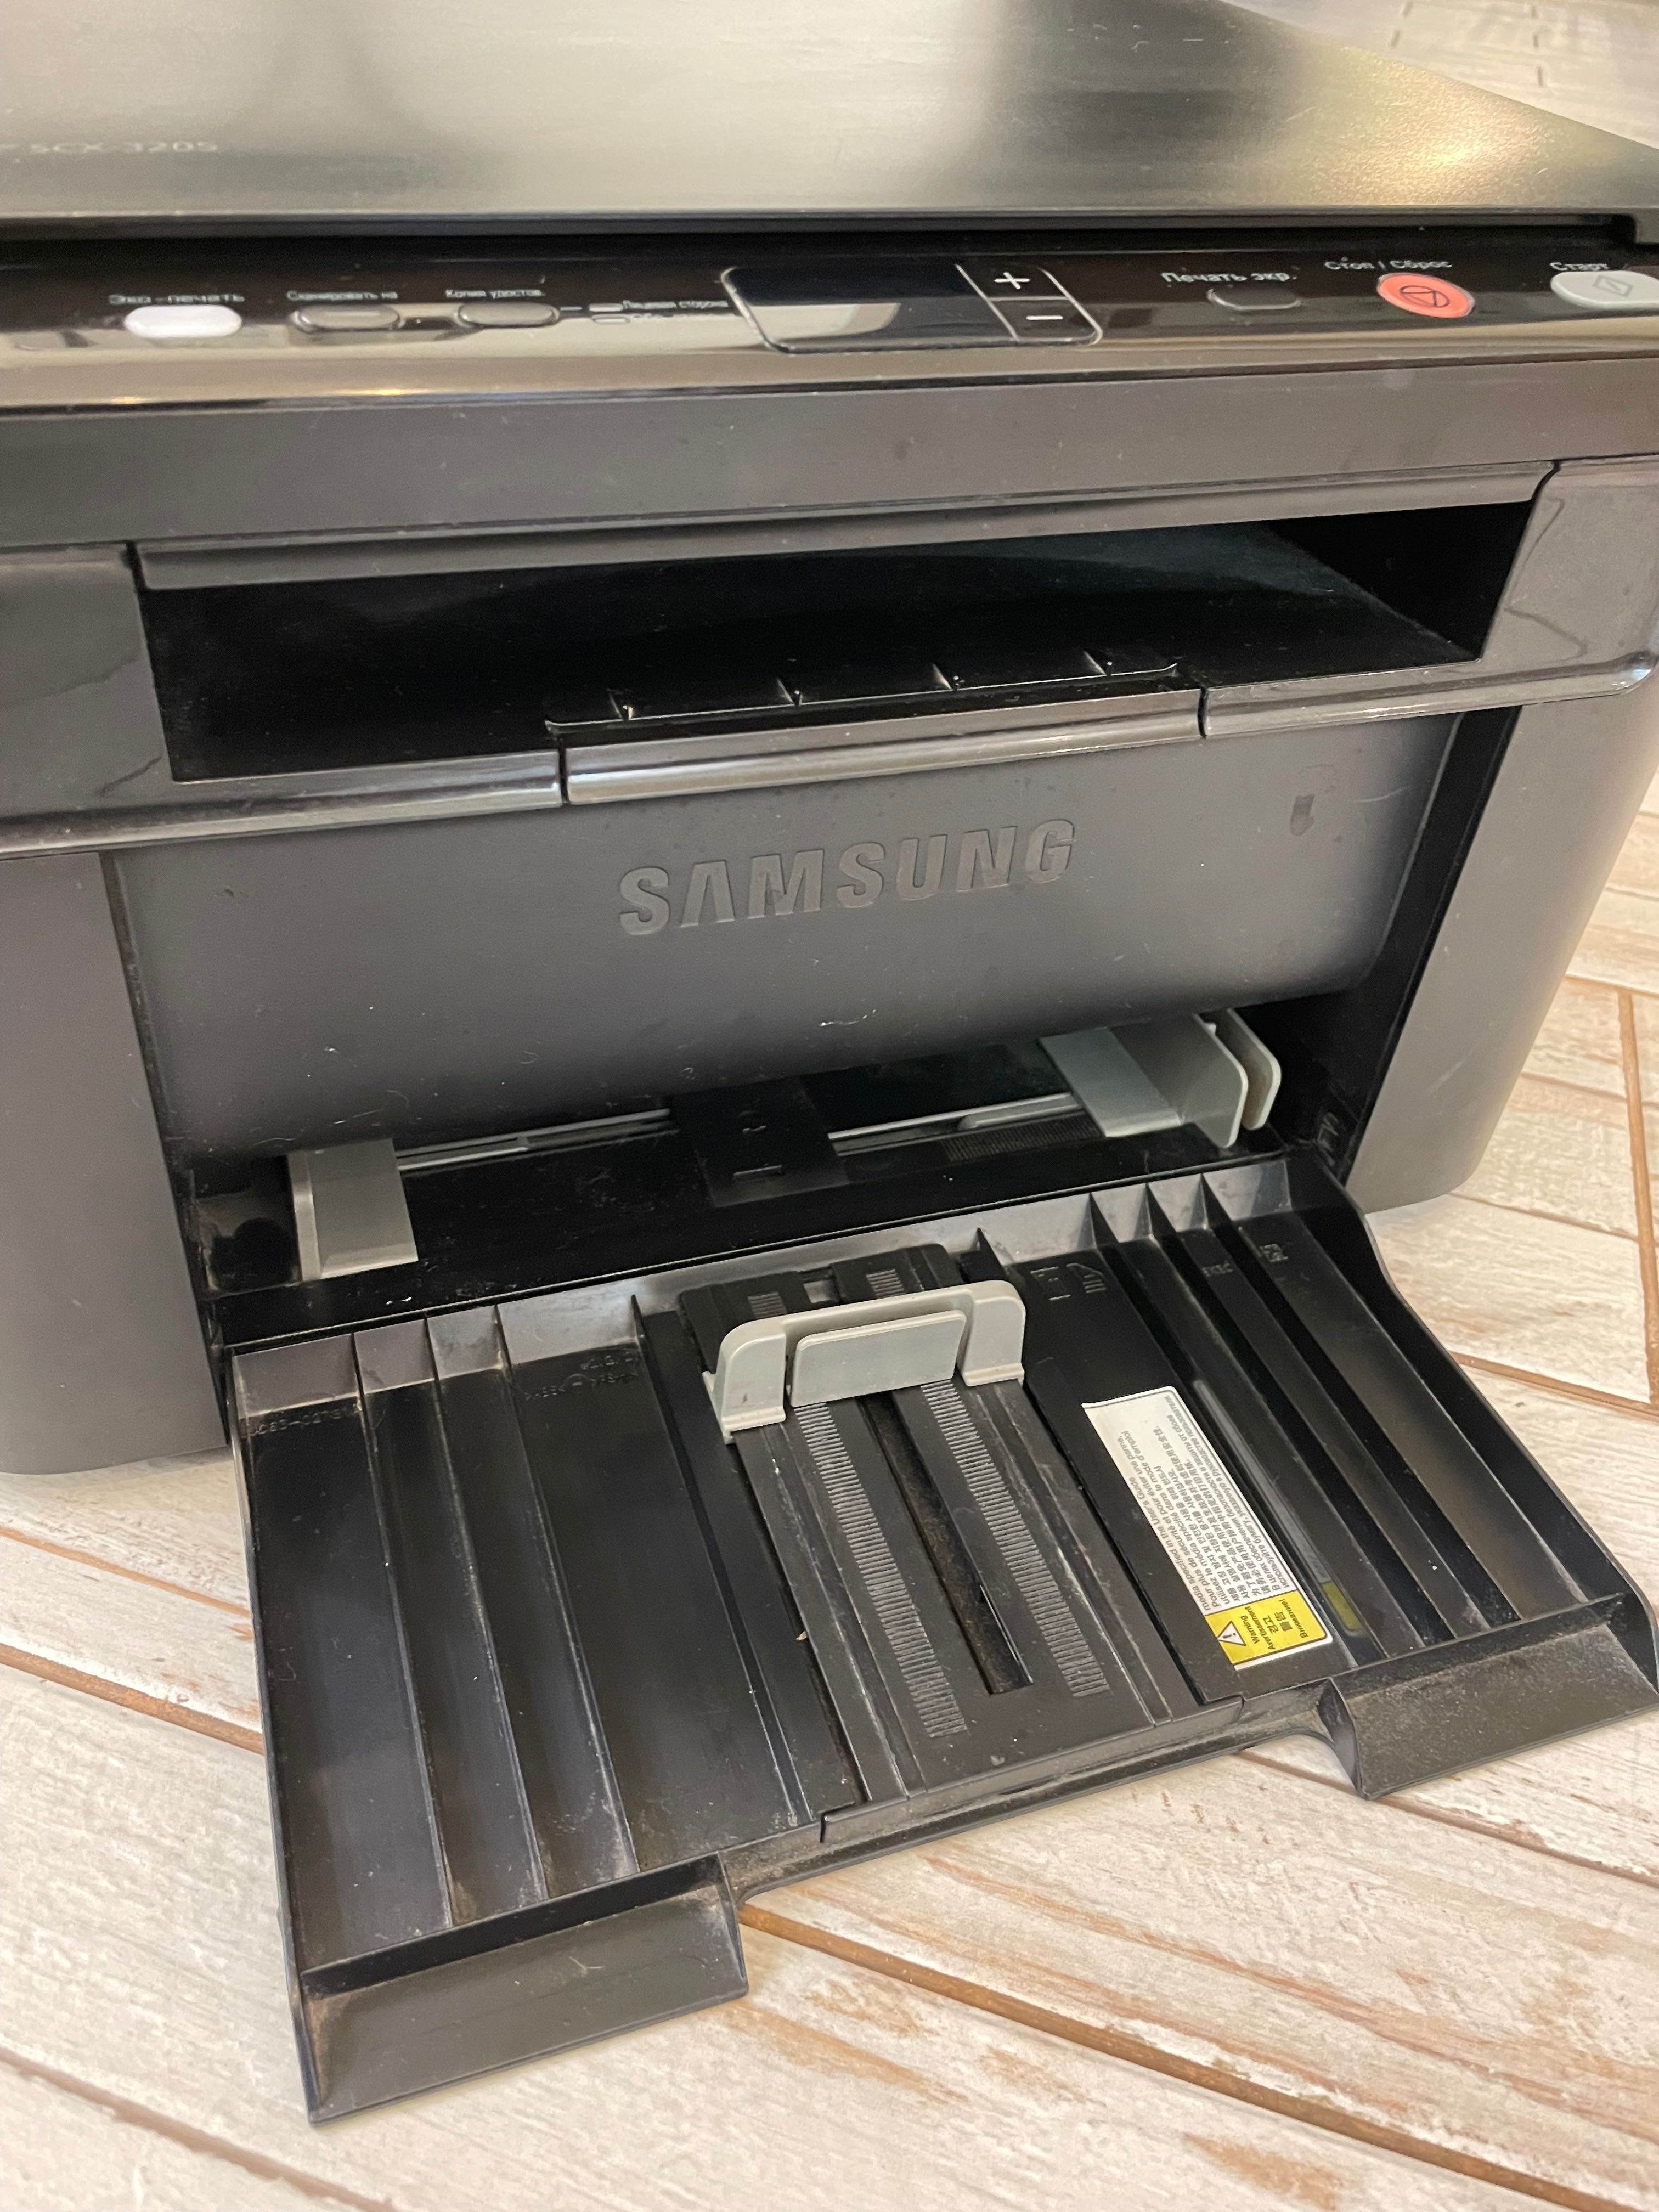 МФП сканер-принтер-ксерокс Samsung SCX-3205 гарний стан